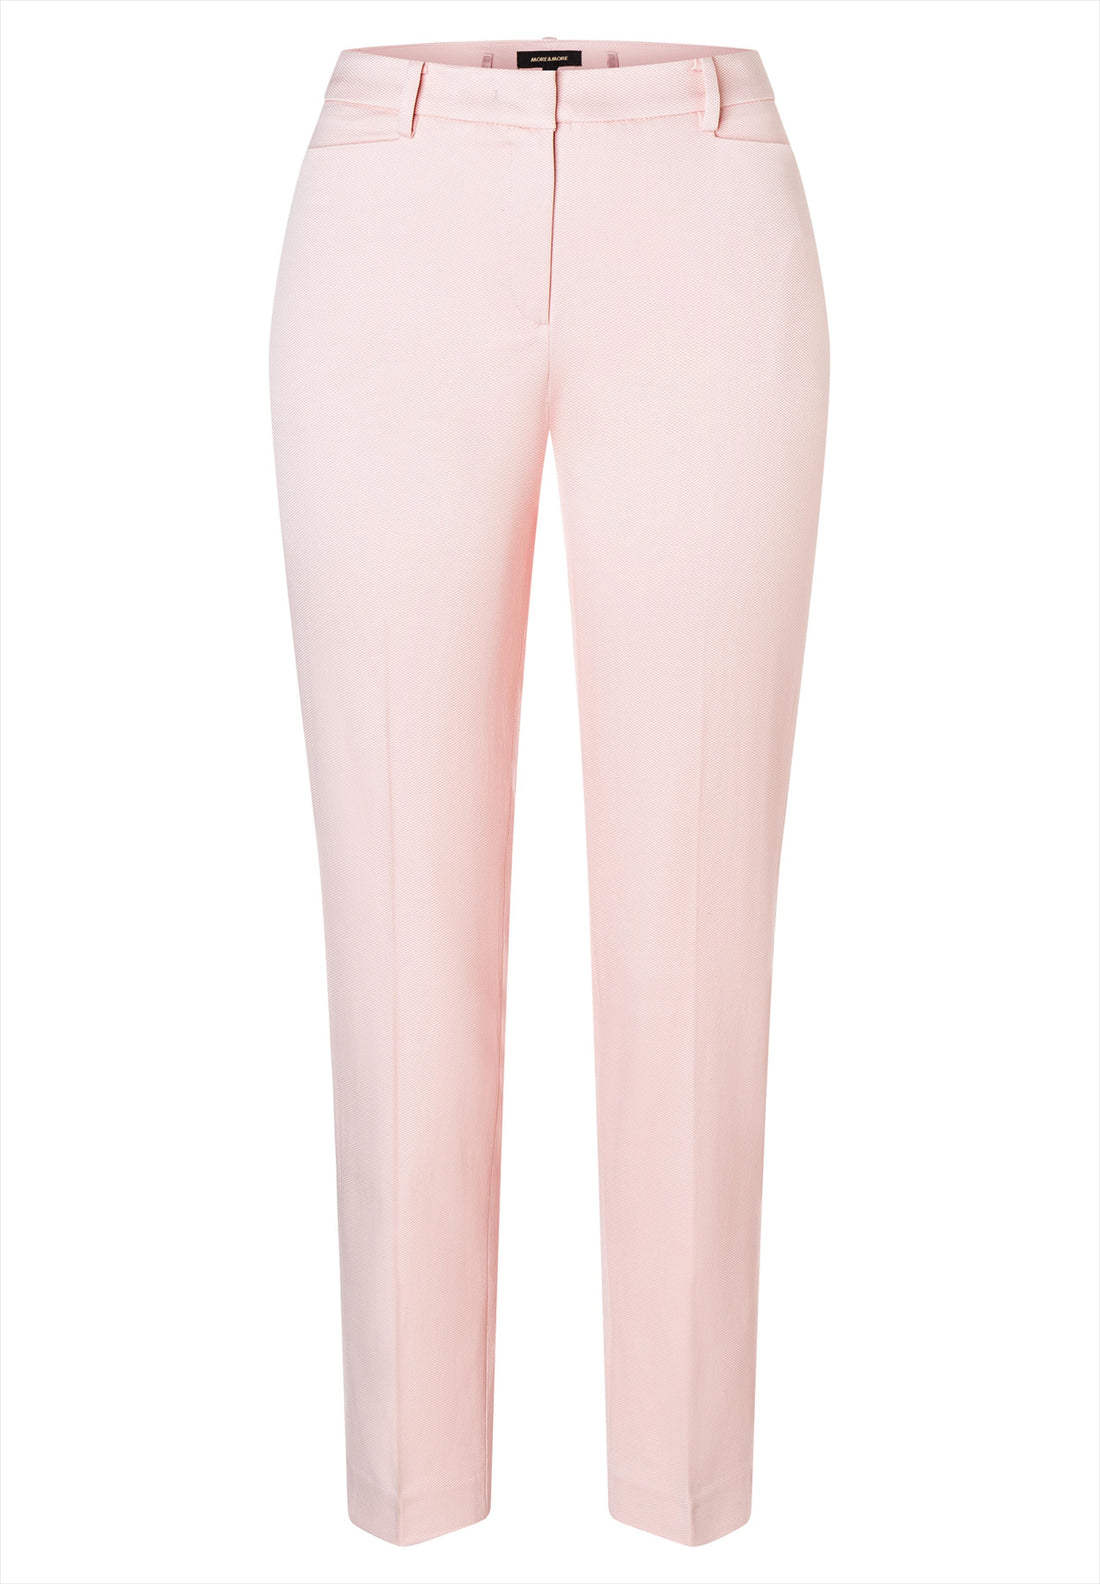 Pants, Pink - 02